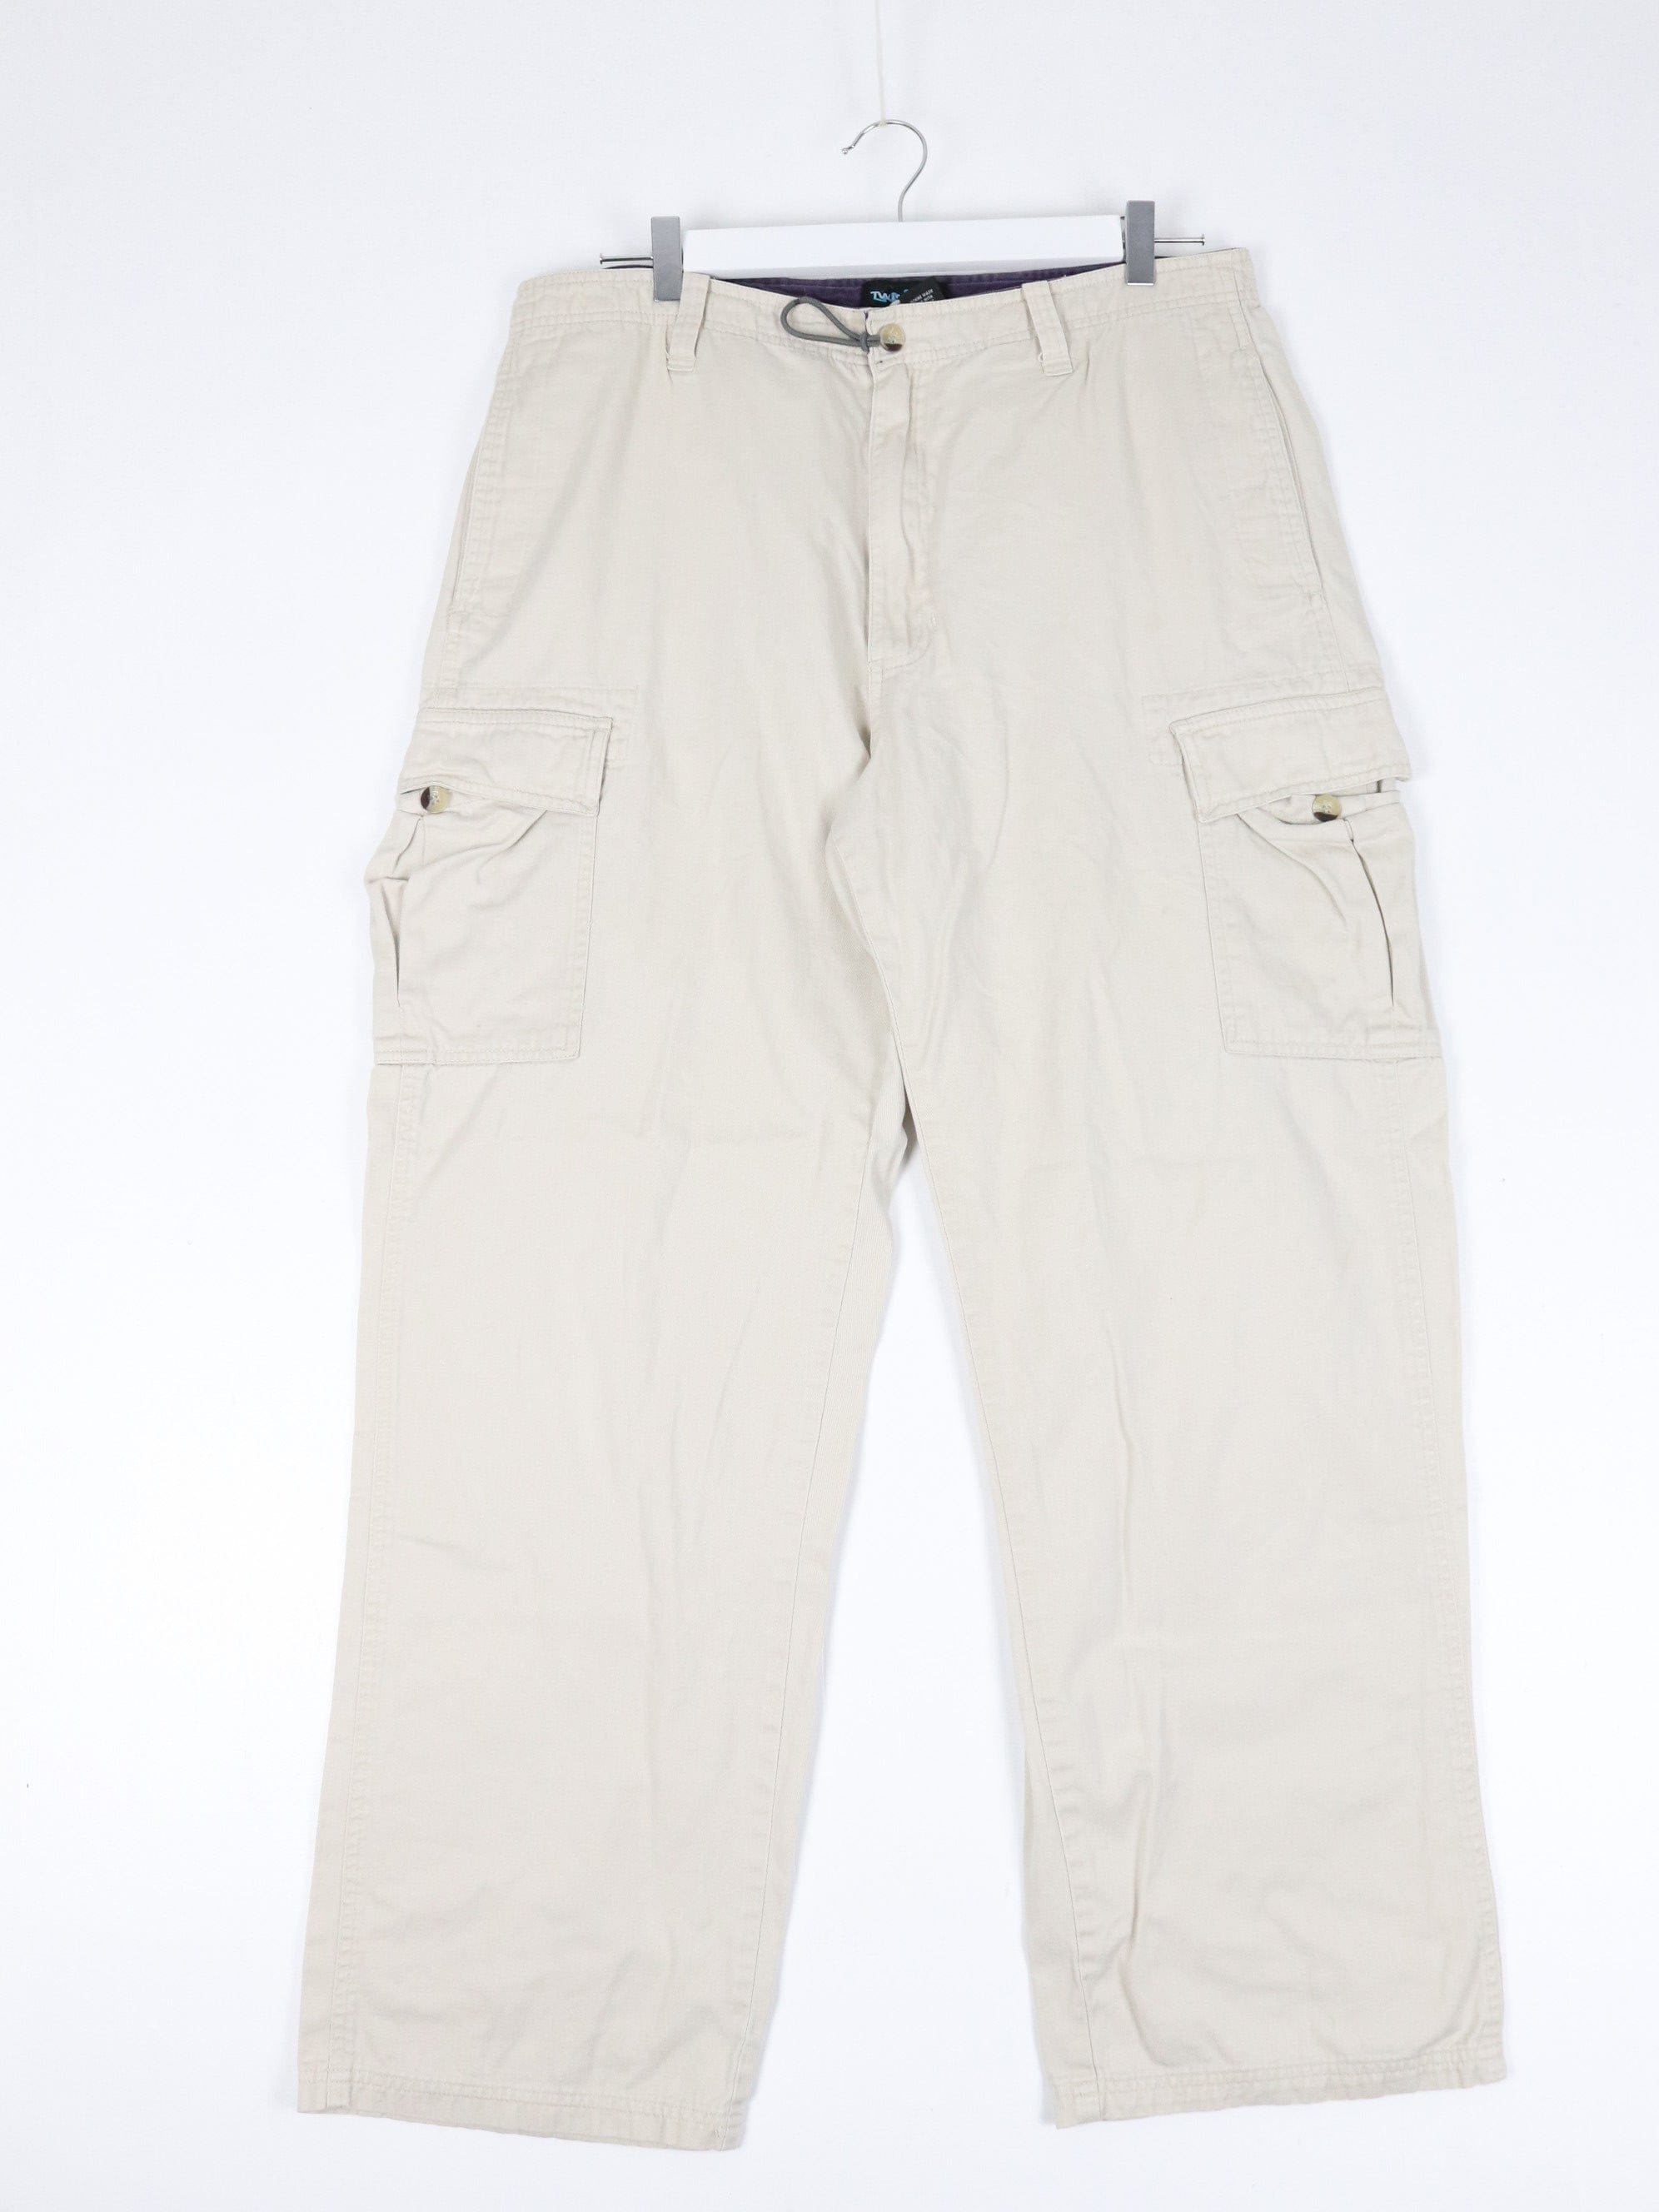 Twisted Wear Pants Fits Mens 36 x 29 Beige Cargo Y2K – Proper Vintage